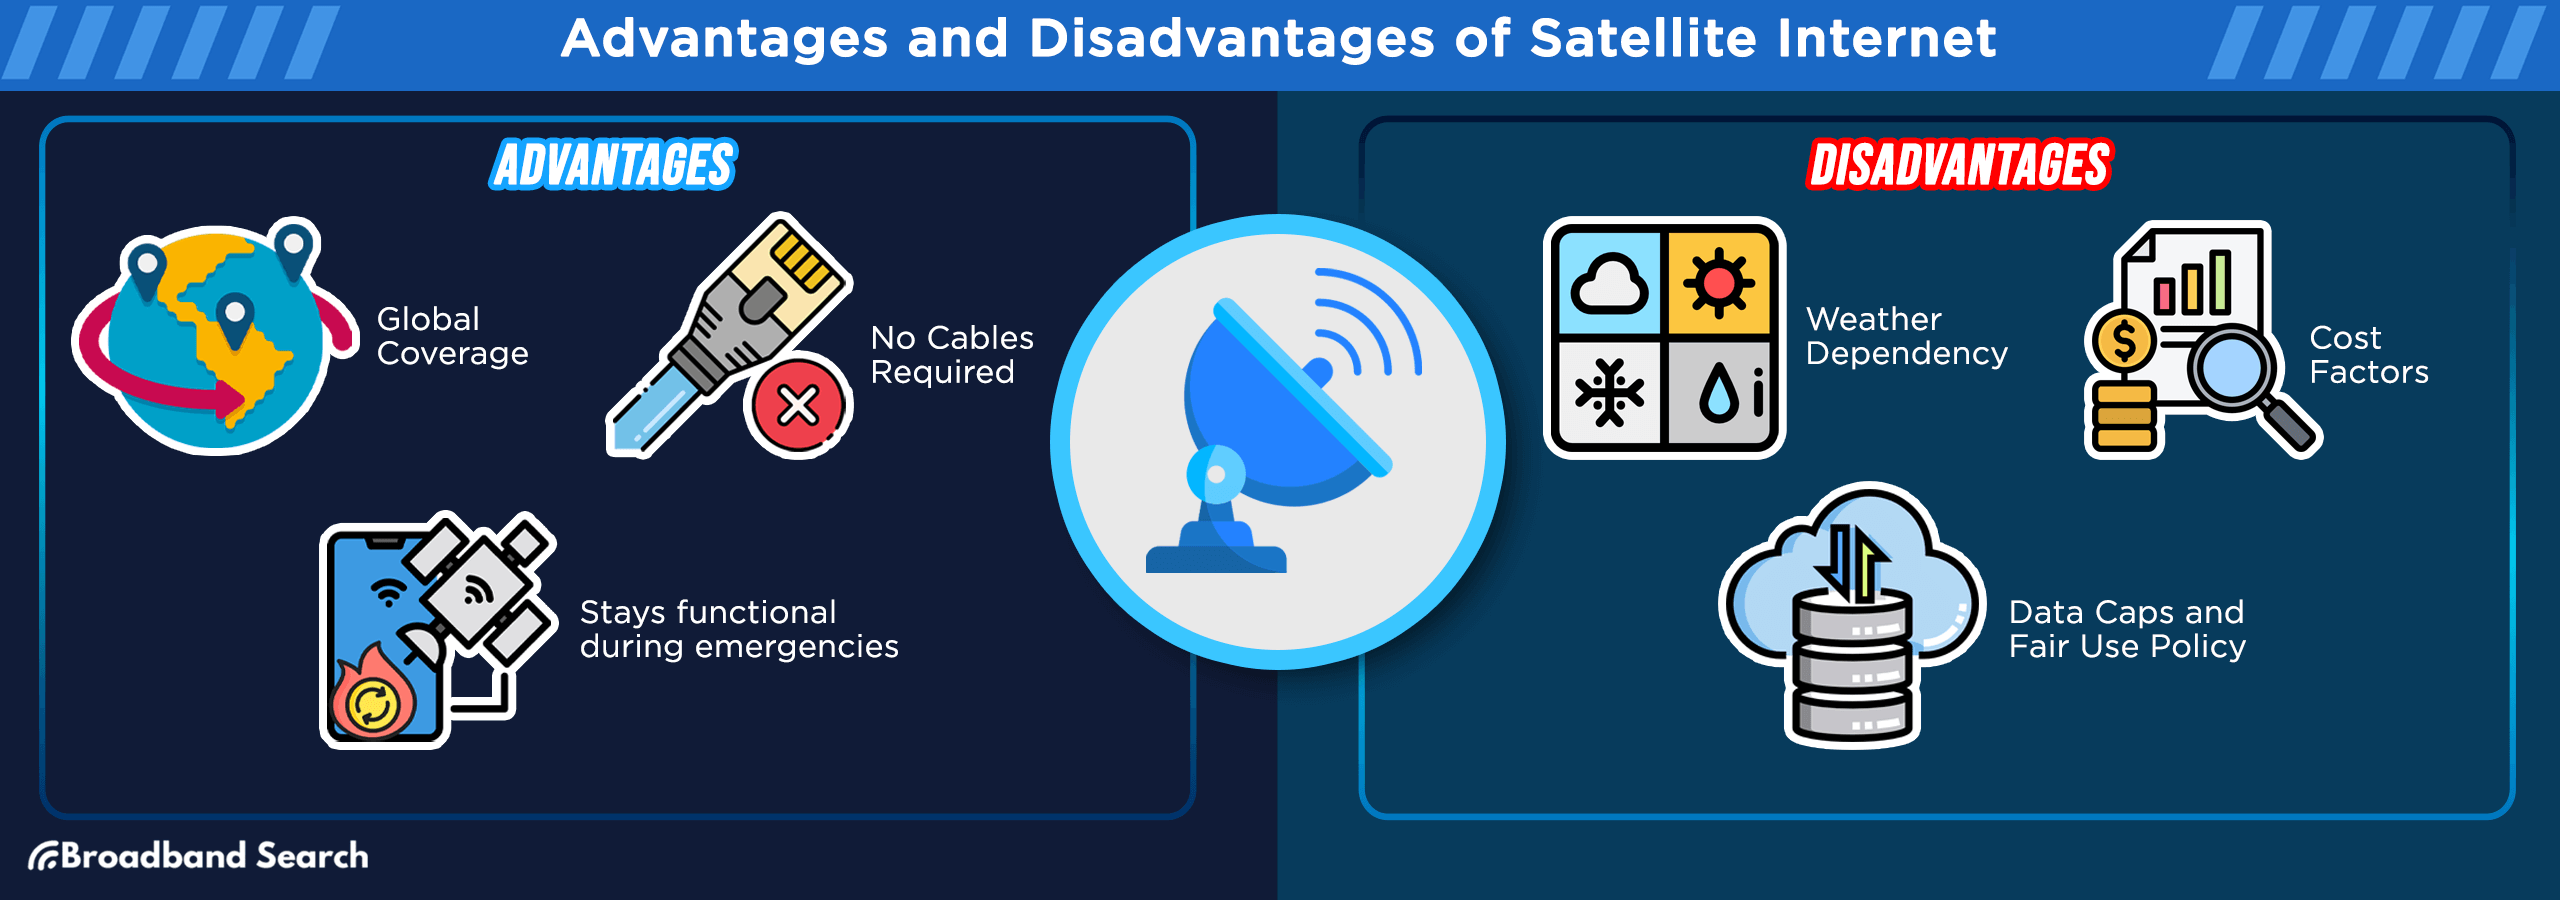 advantages and disadvantages of satellite internet